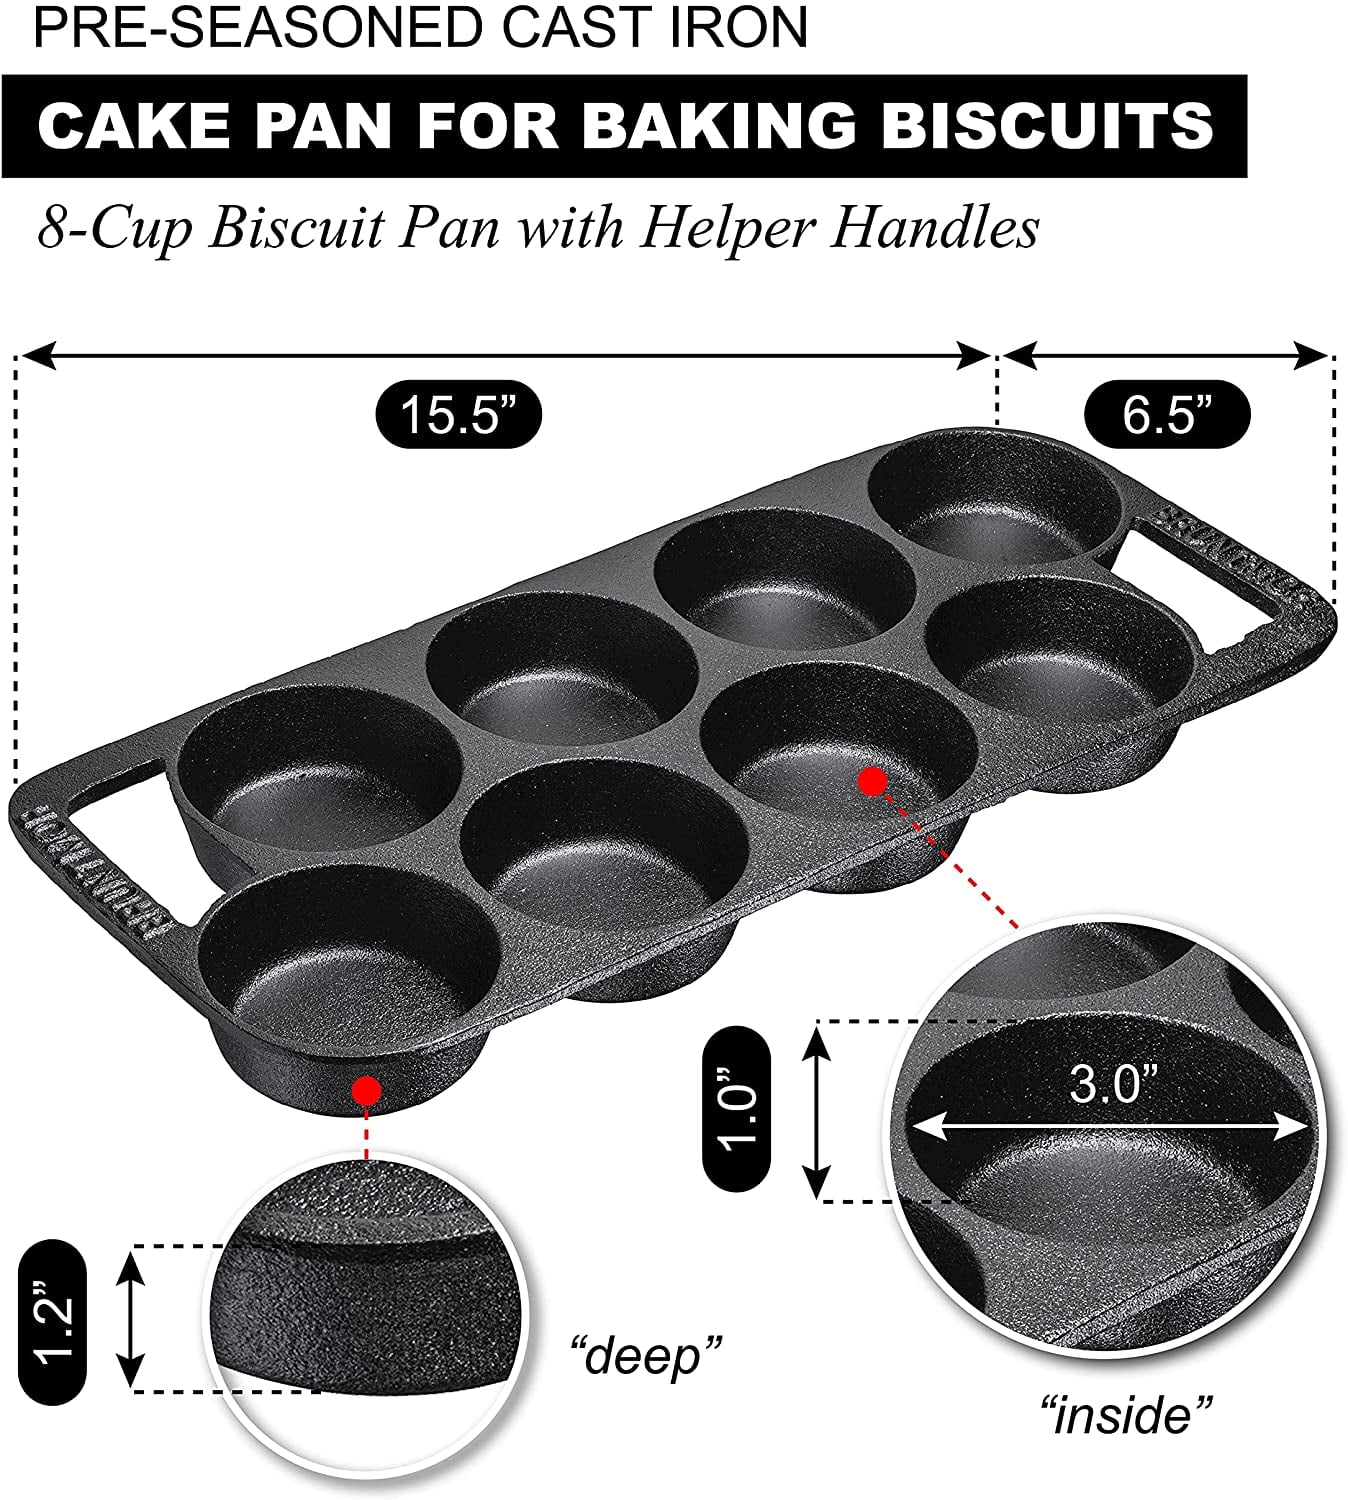 Bruntmor Pre-Seasoned Cast Iron 7-Cup Biscuit Pan - Round Kitchen Nonstick Baking Tools for Scones, Cornbread, Muffins, Polenta Cake, Brownies, and Bi